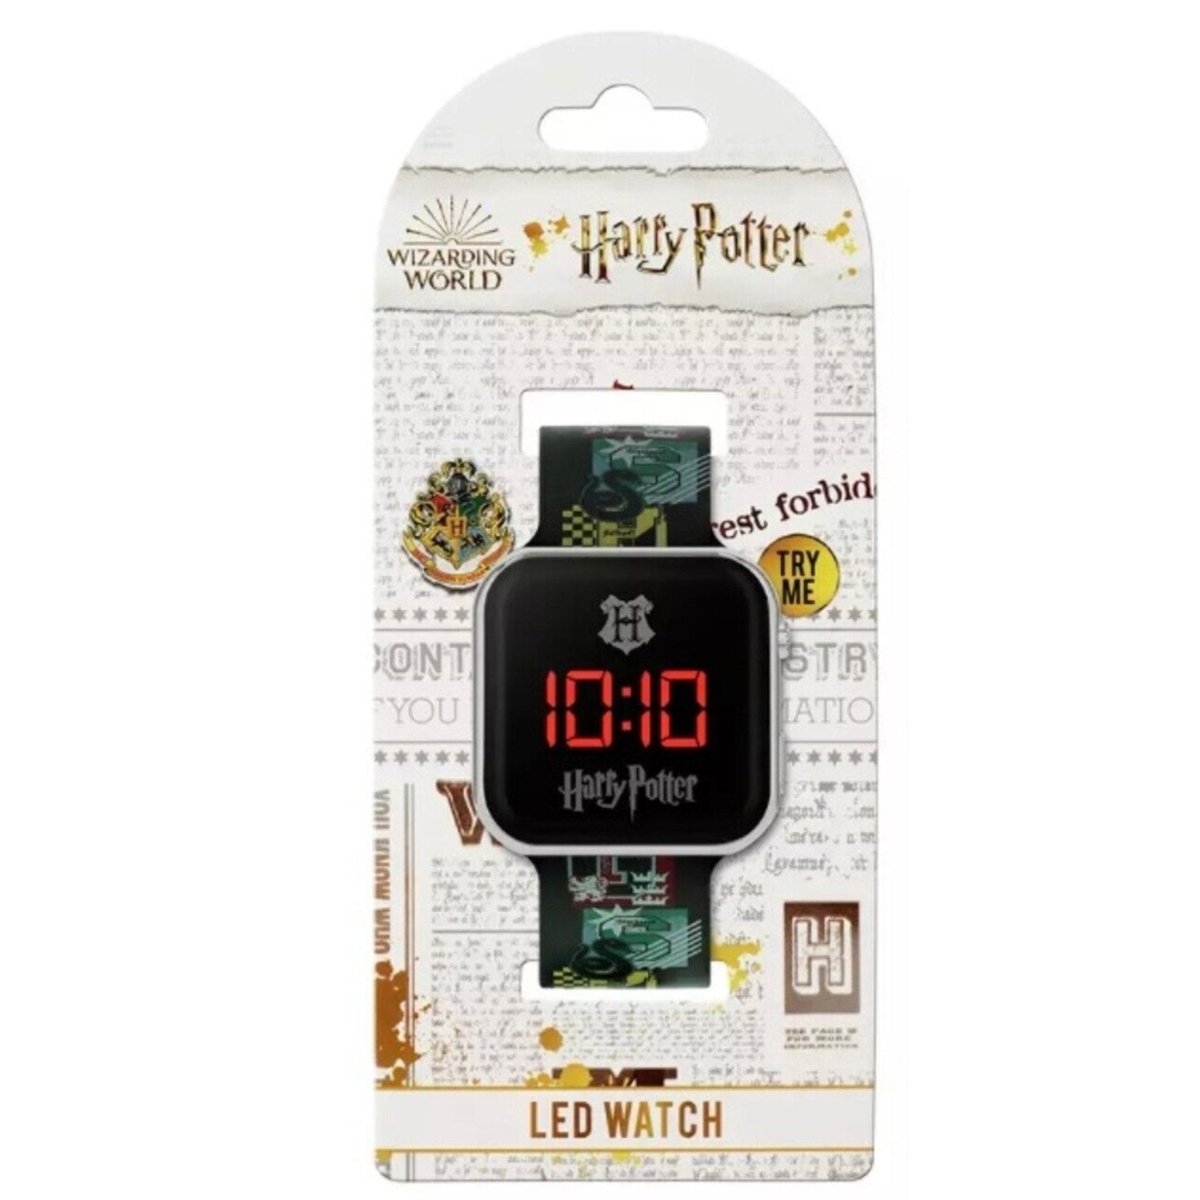 Harry Potter LED watch - Kids Party Craft